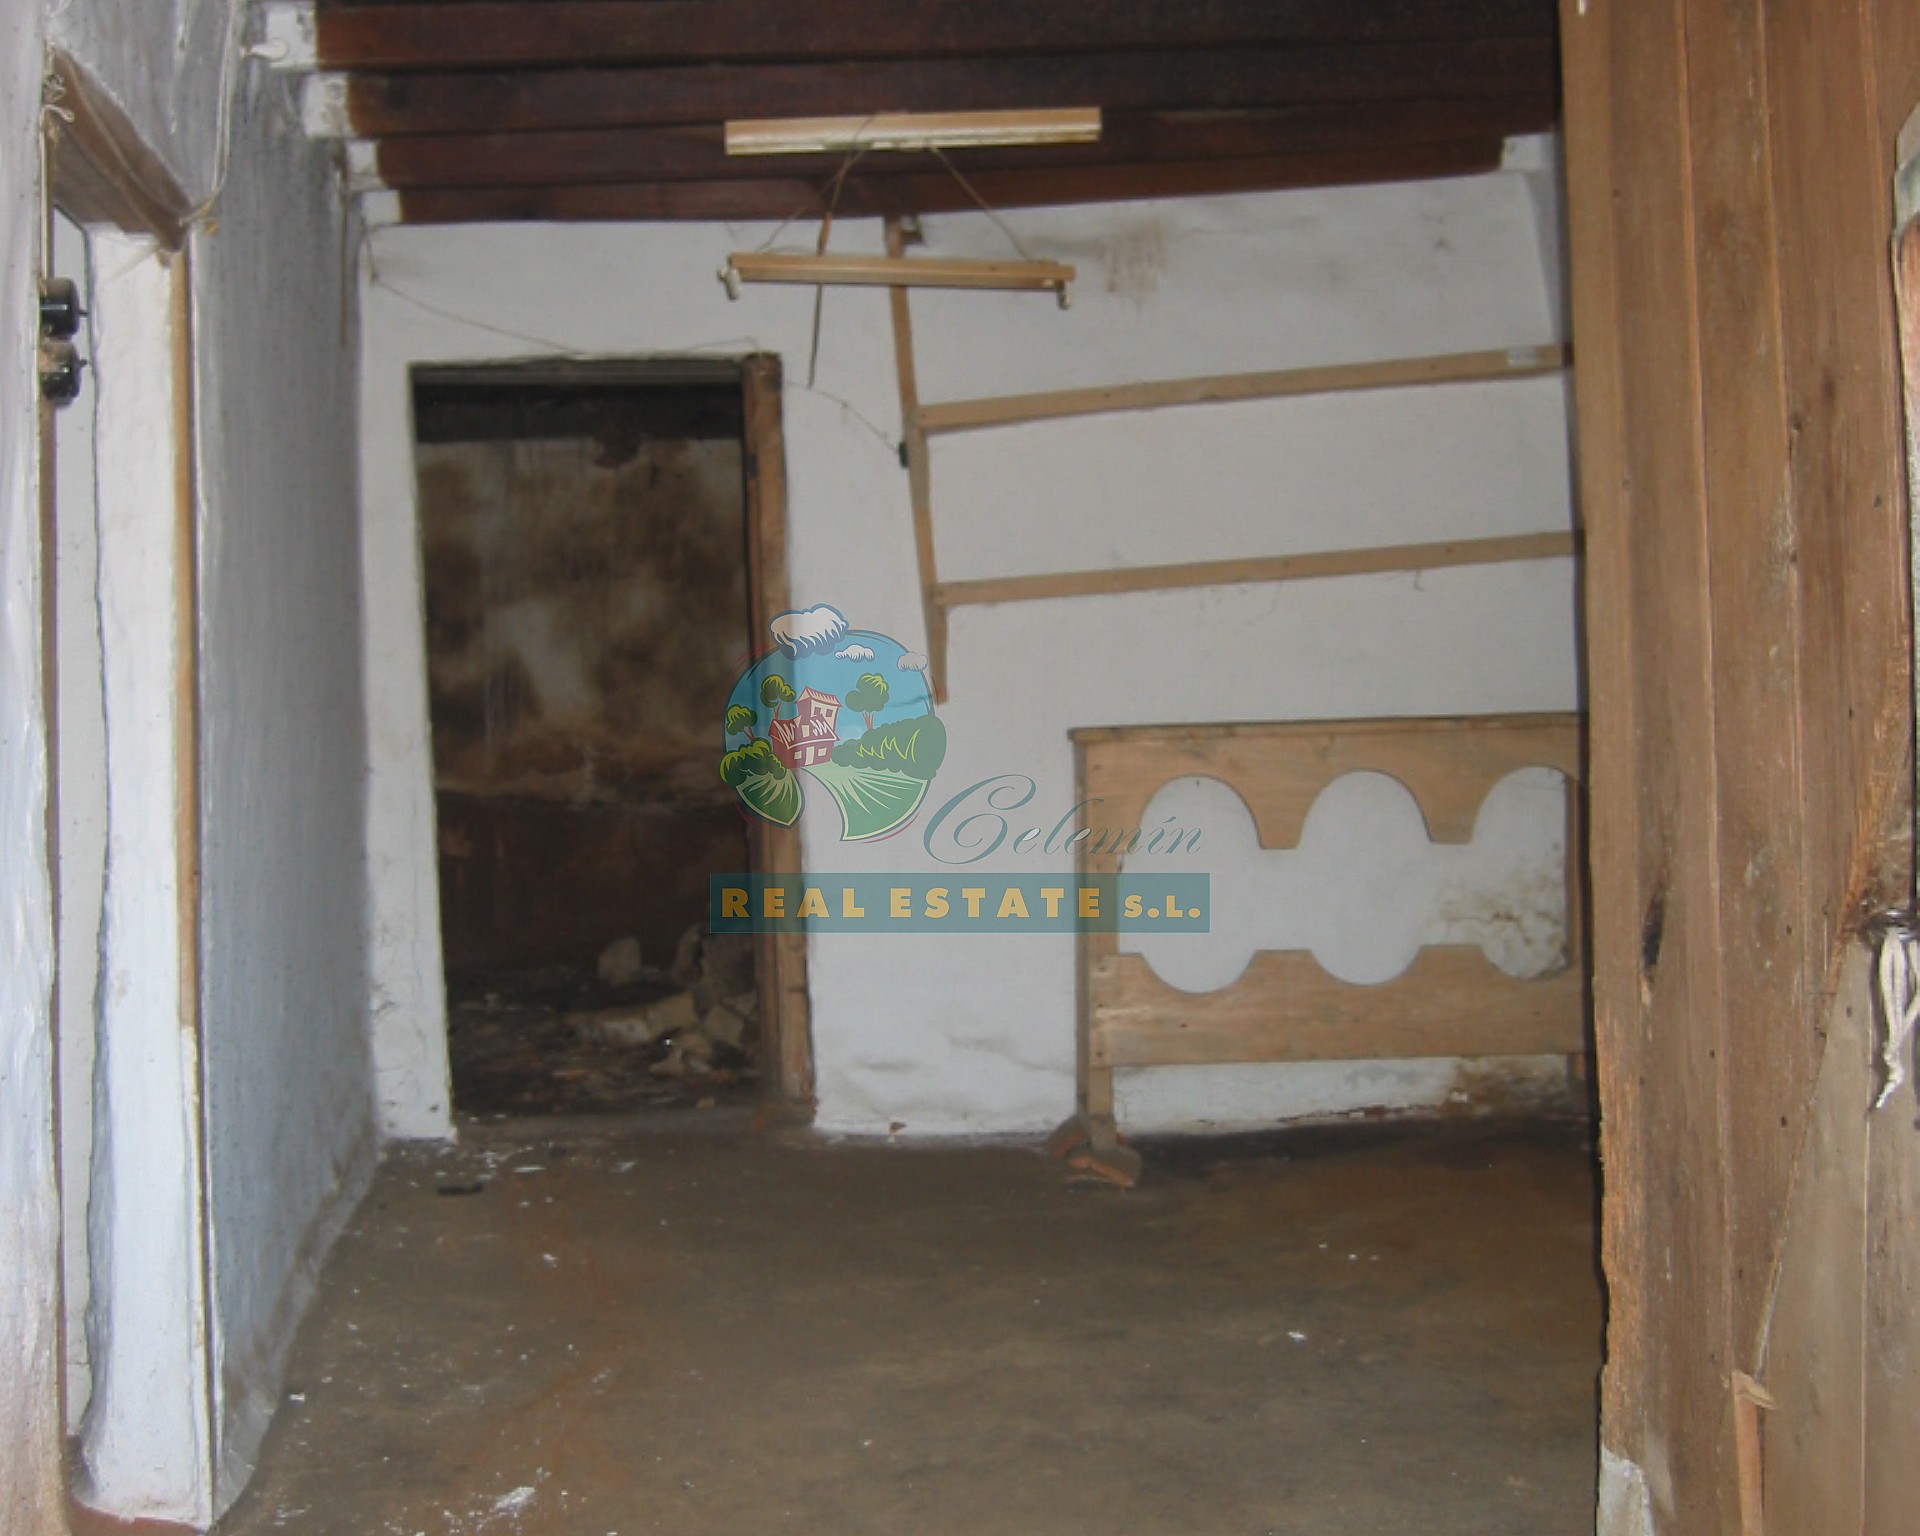 House needs rehabilitation in Sierra de Gredos.